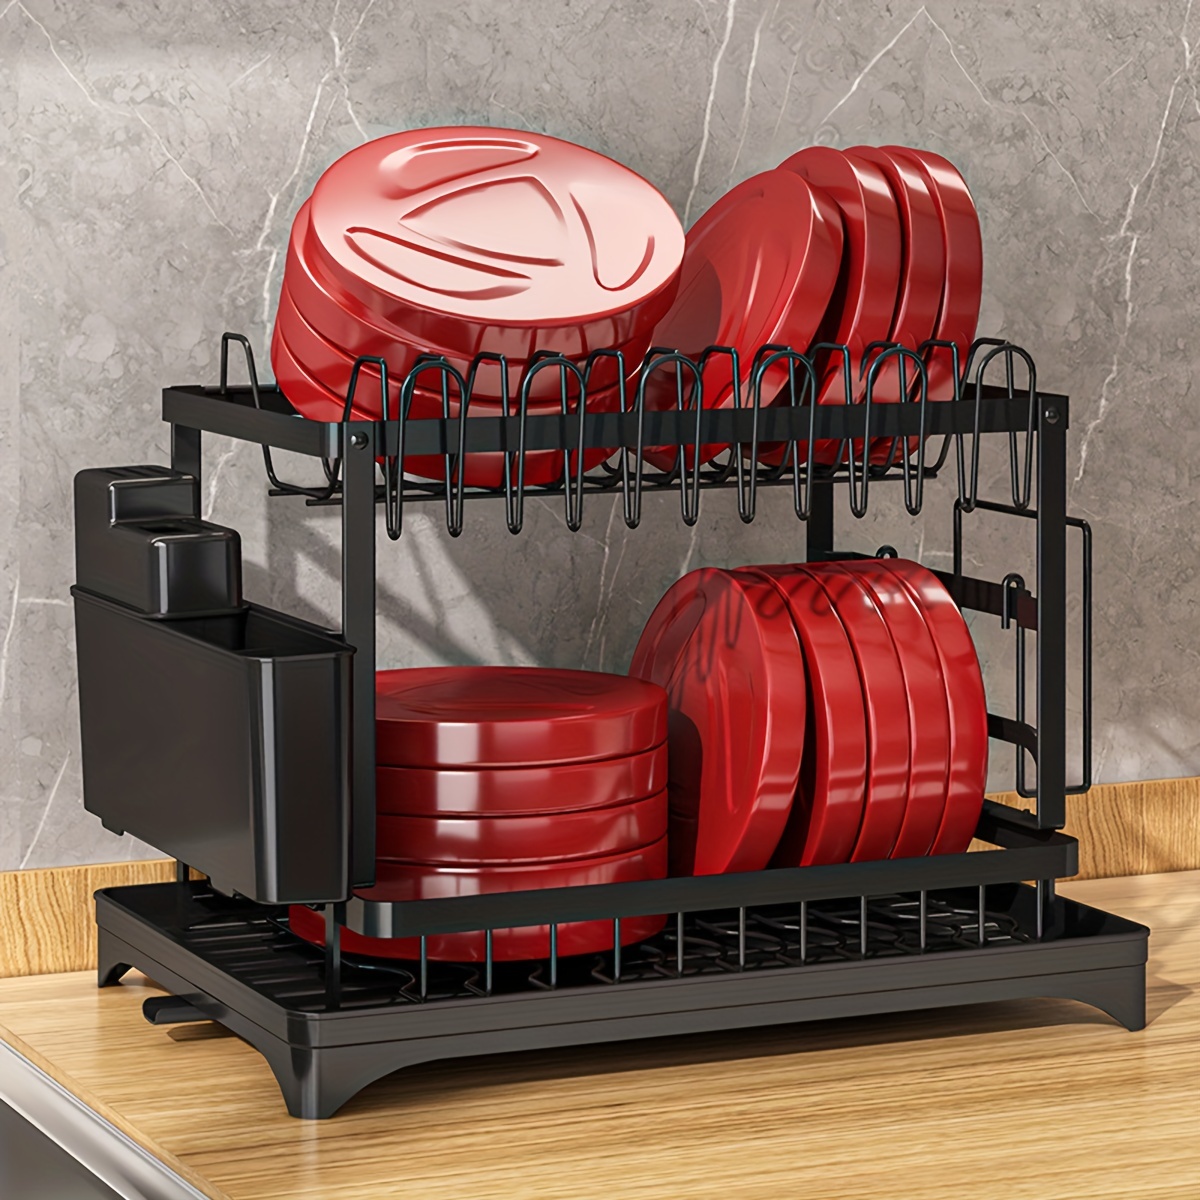 Freestanding kitchen set 3 tiers dish organizer knife rack bowl Holder dish  drainer rack